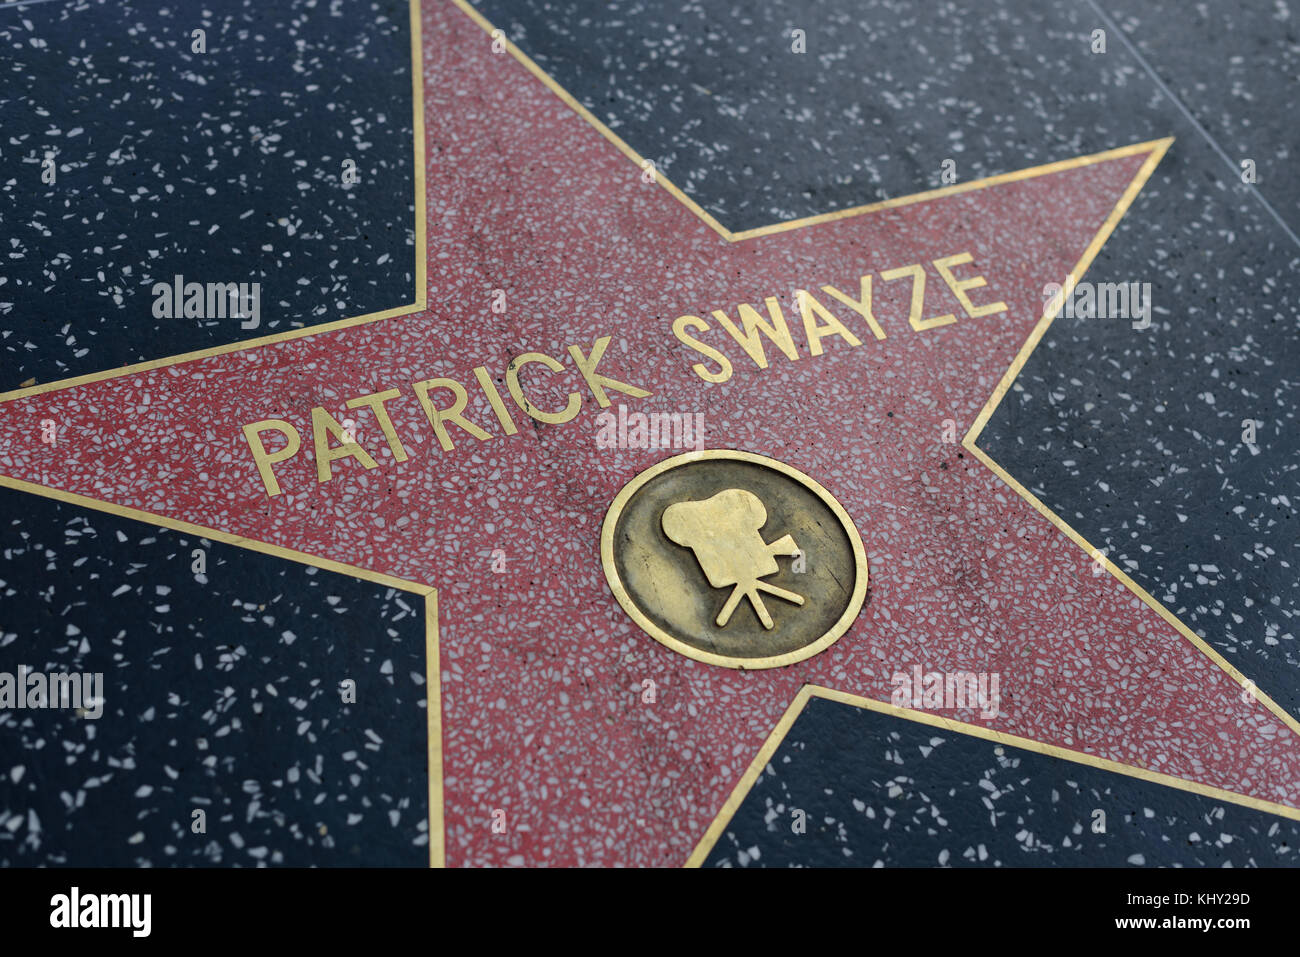 HOLLYWOOD, CA - DICEMBRE 06: Patrick Swayze stella sulla Hollywood Walk of Fame a Hollywood, California il 6 dicembre 2016. Foto Stock